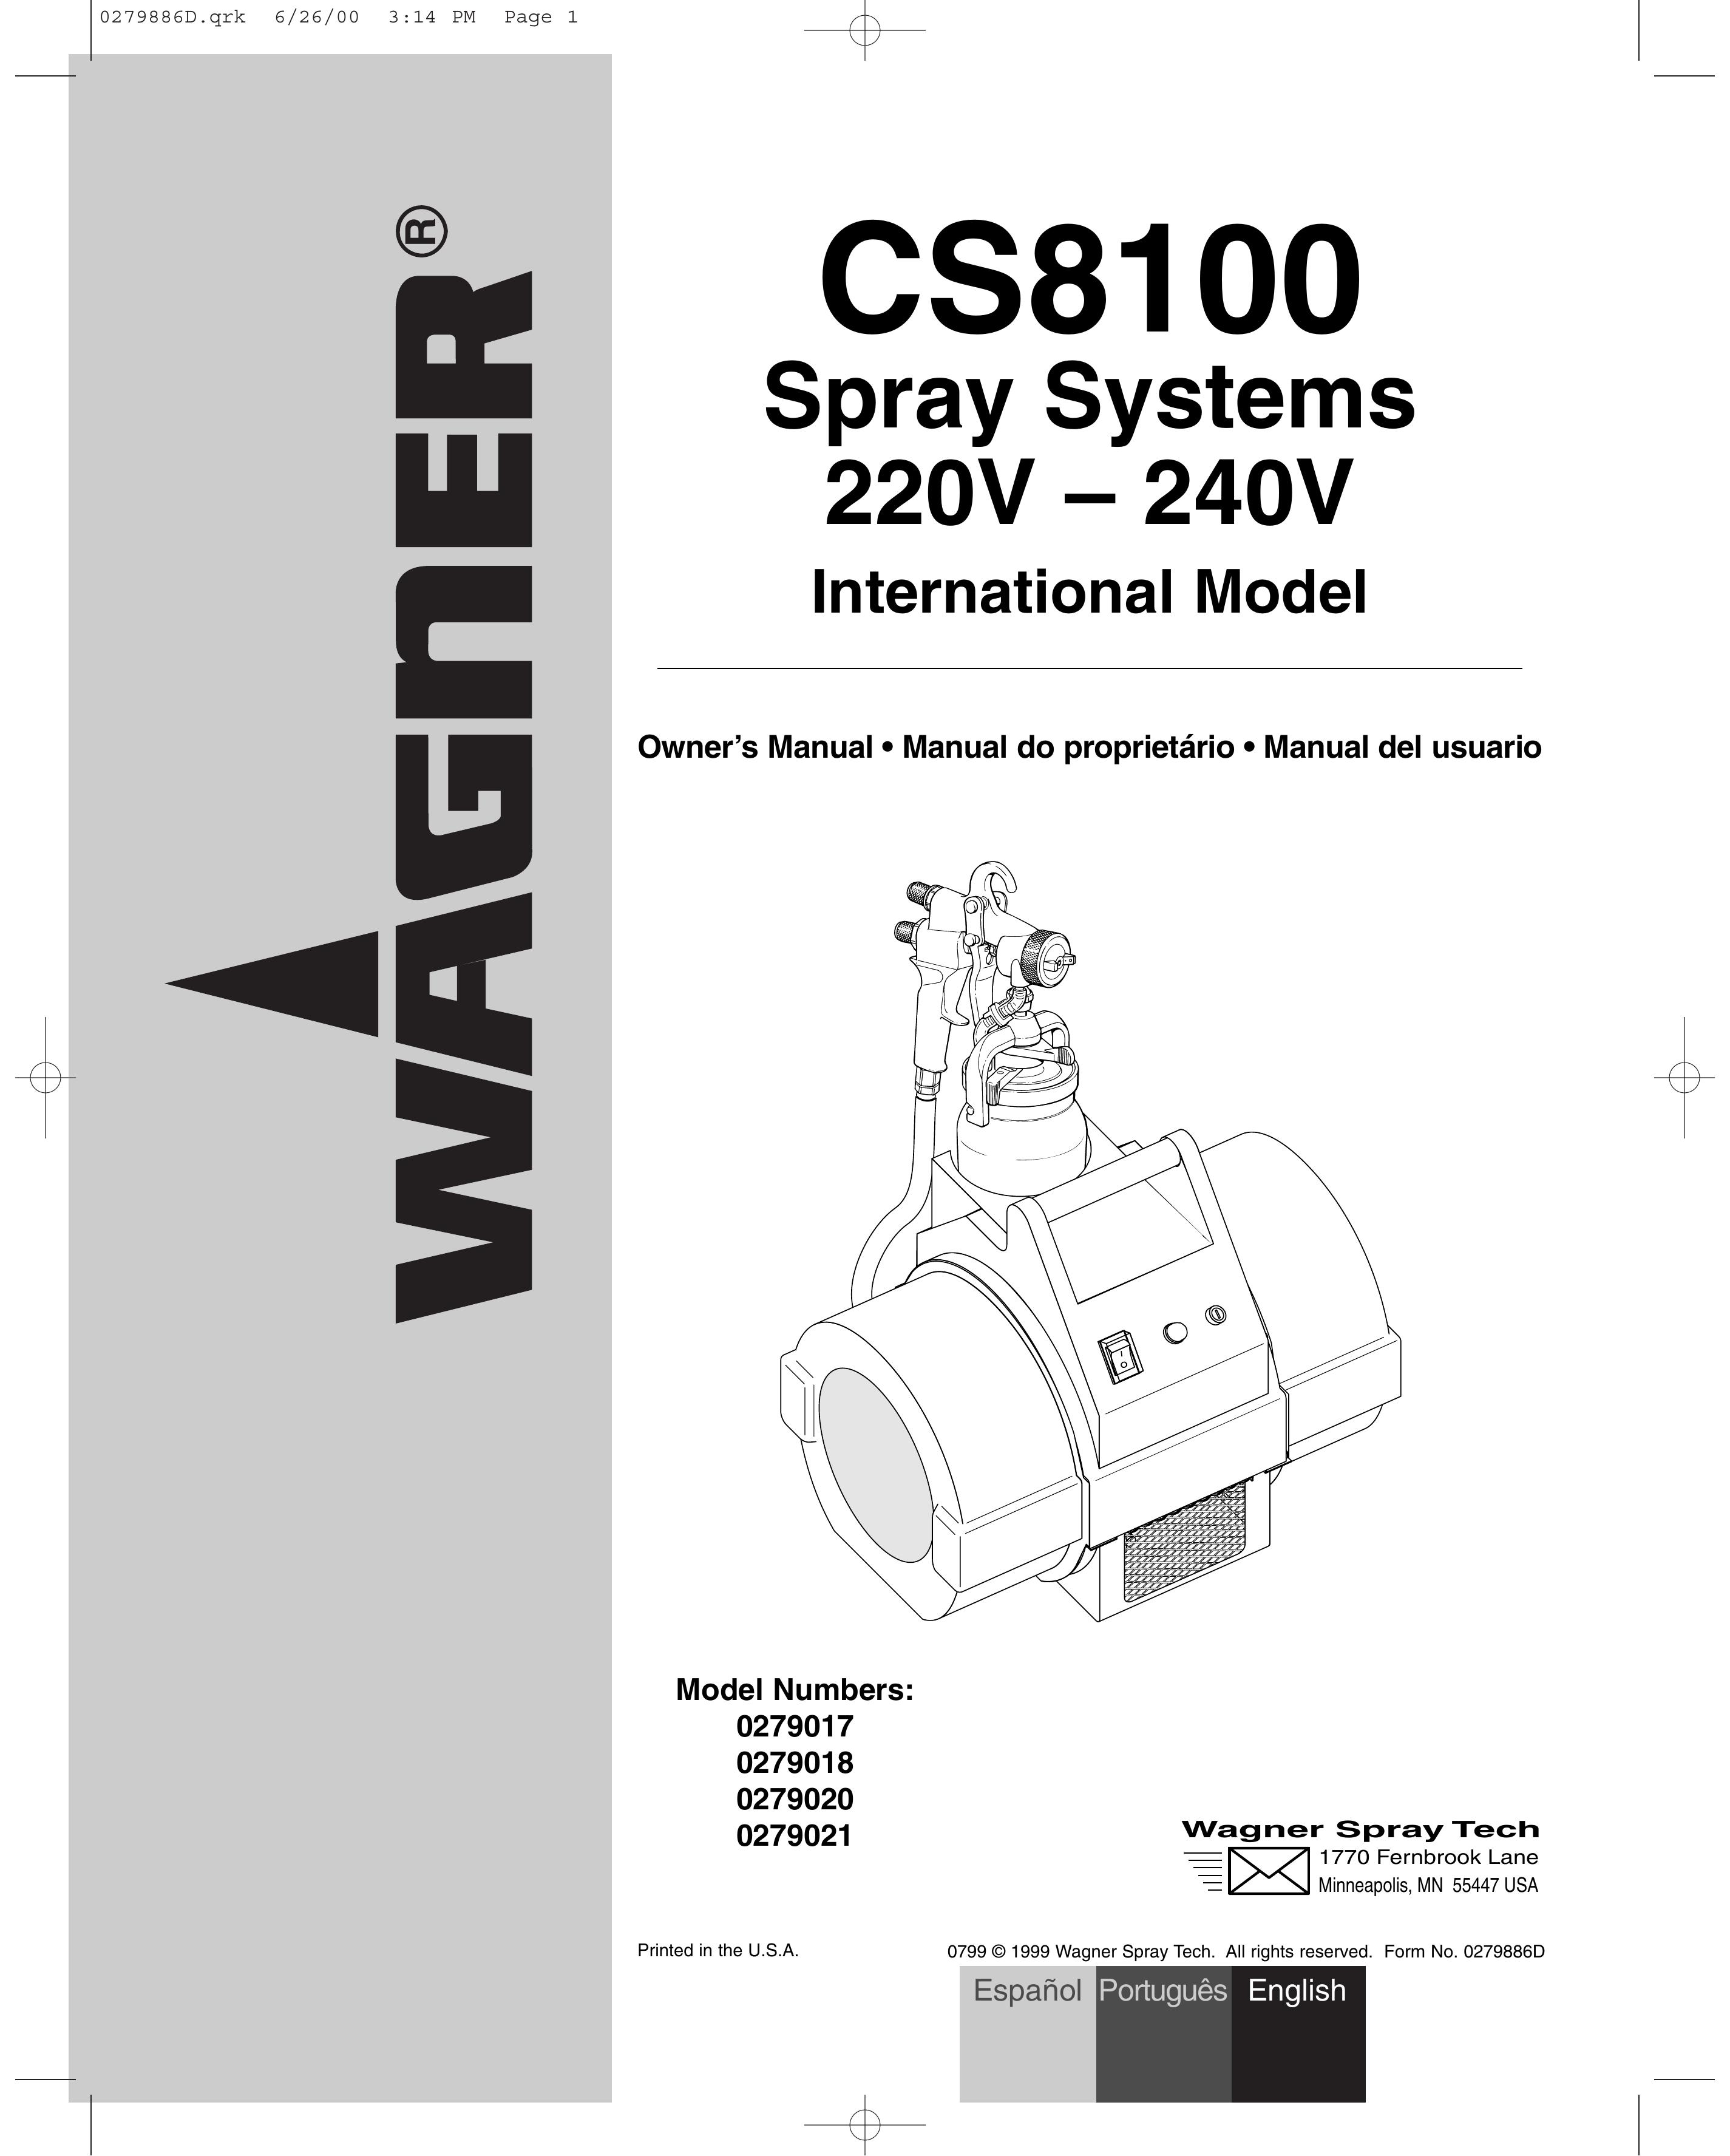 Wagner SprayTech 279017 Lawn Mower Accessory User Manual